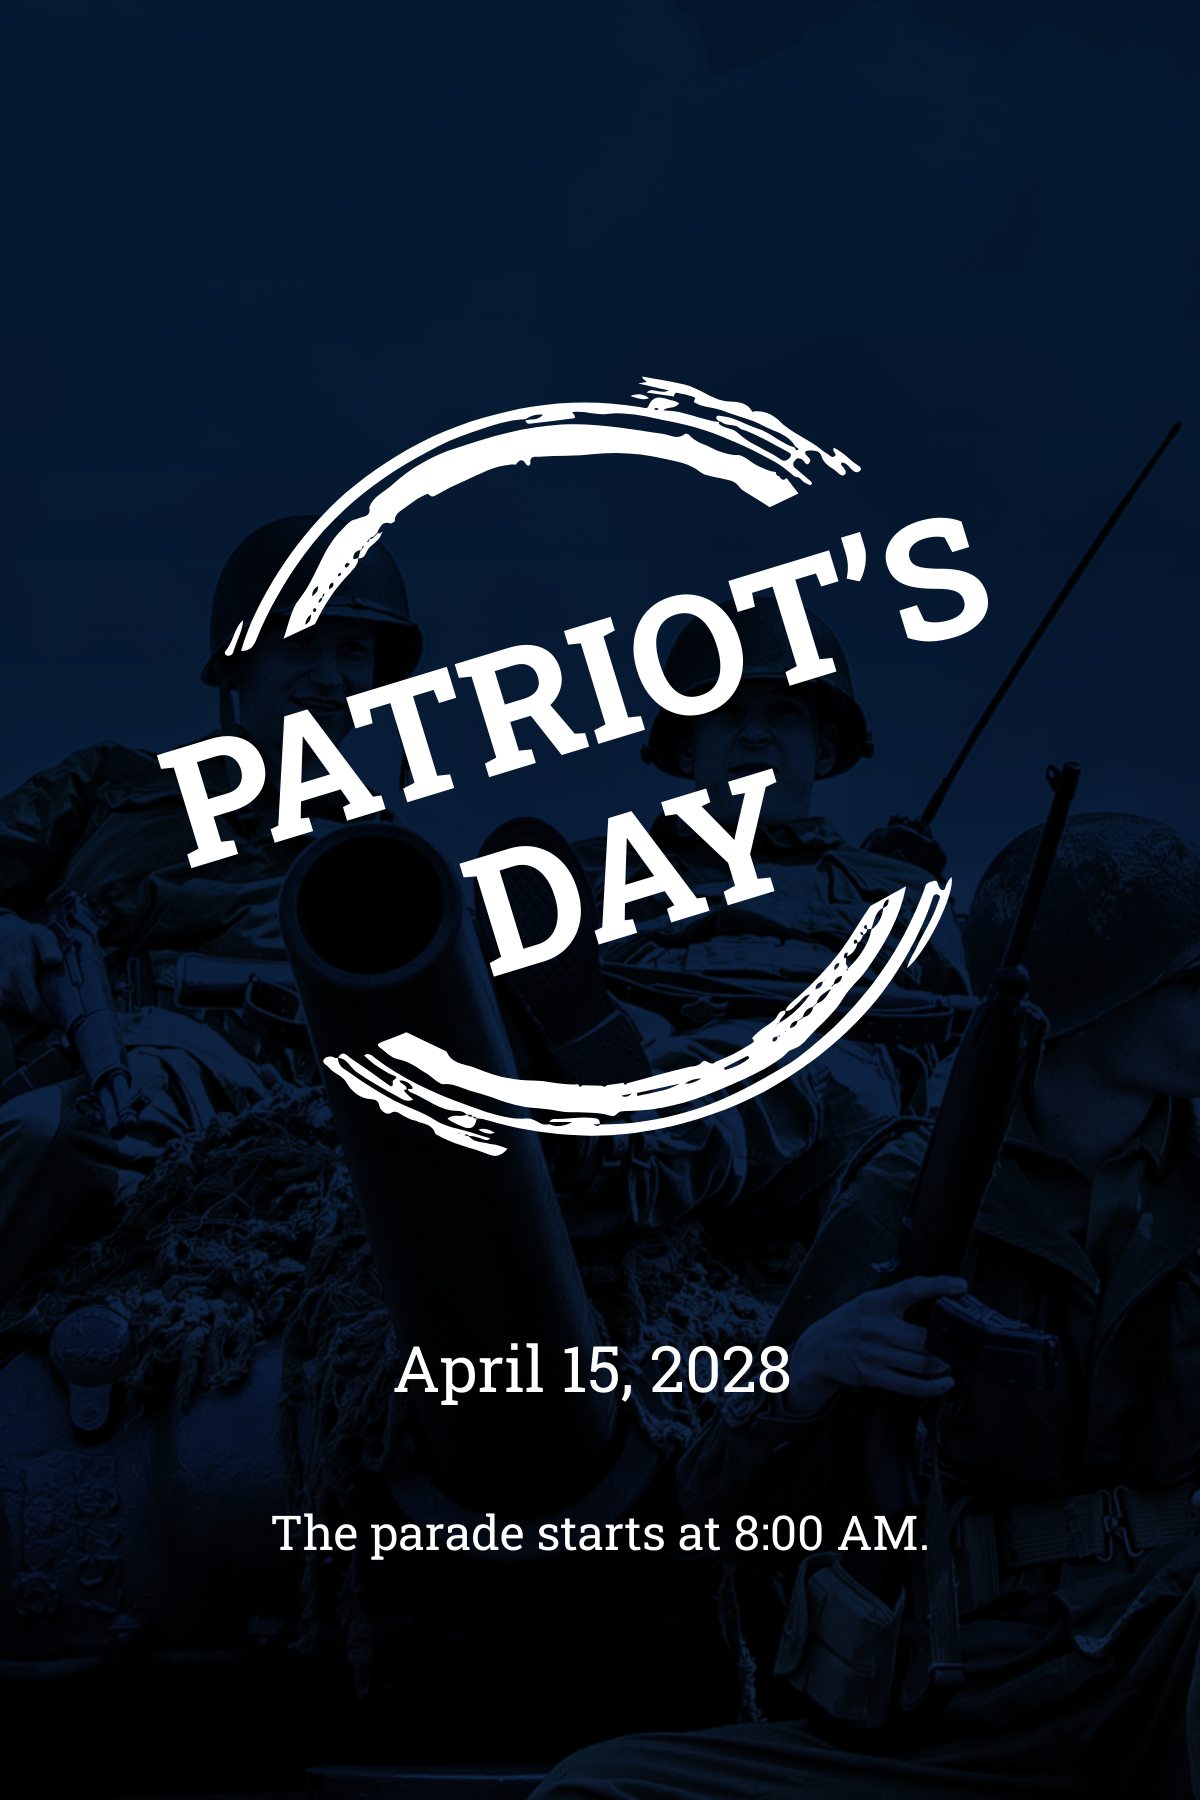 Patriot's Day Pinterest Pin